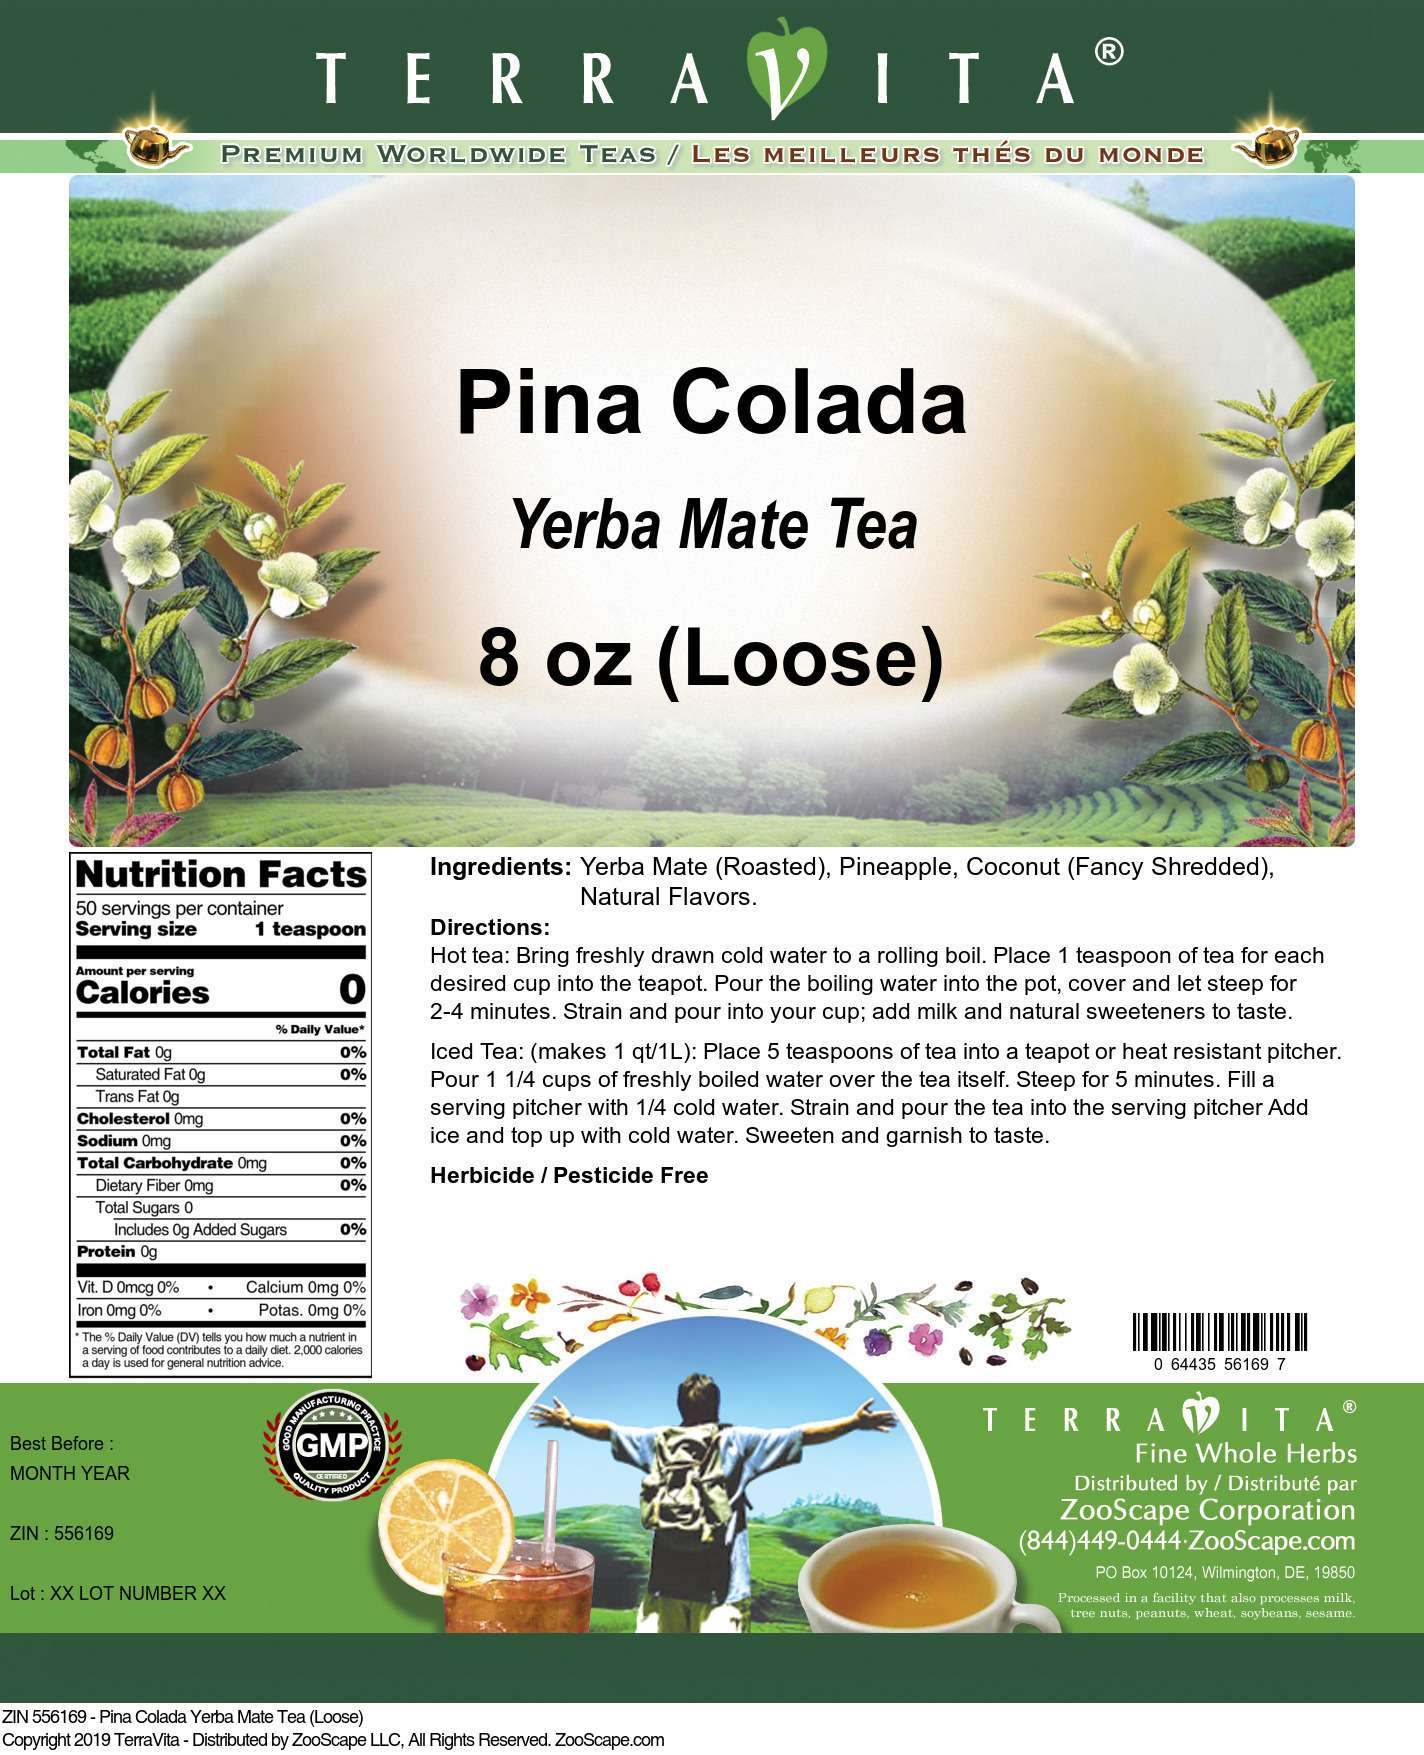 Pina Colada Yerba Mate Tea (Loose) - Label